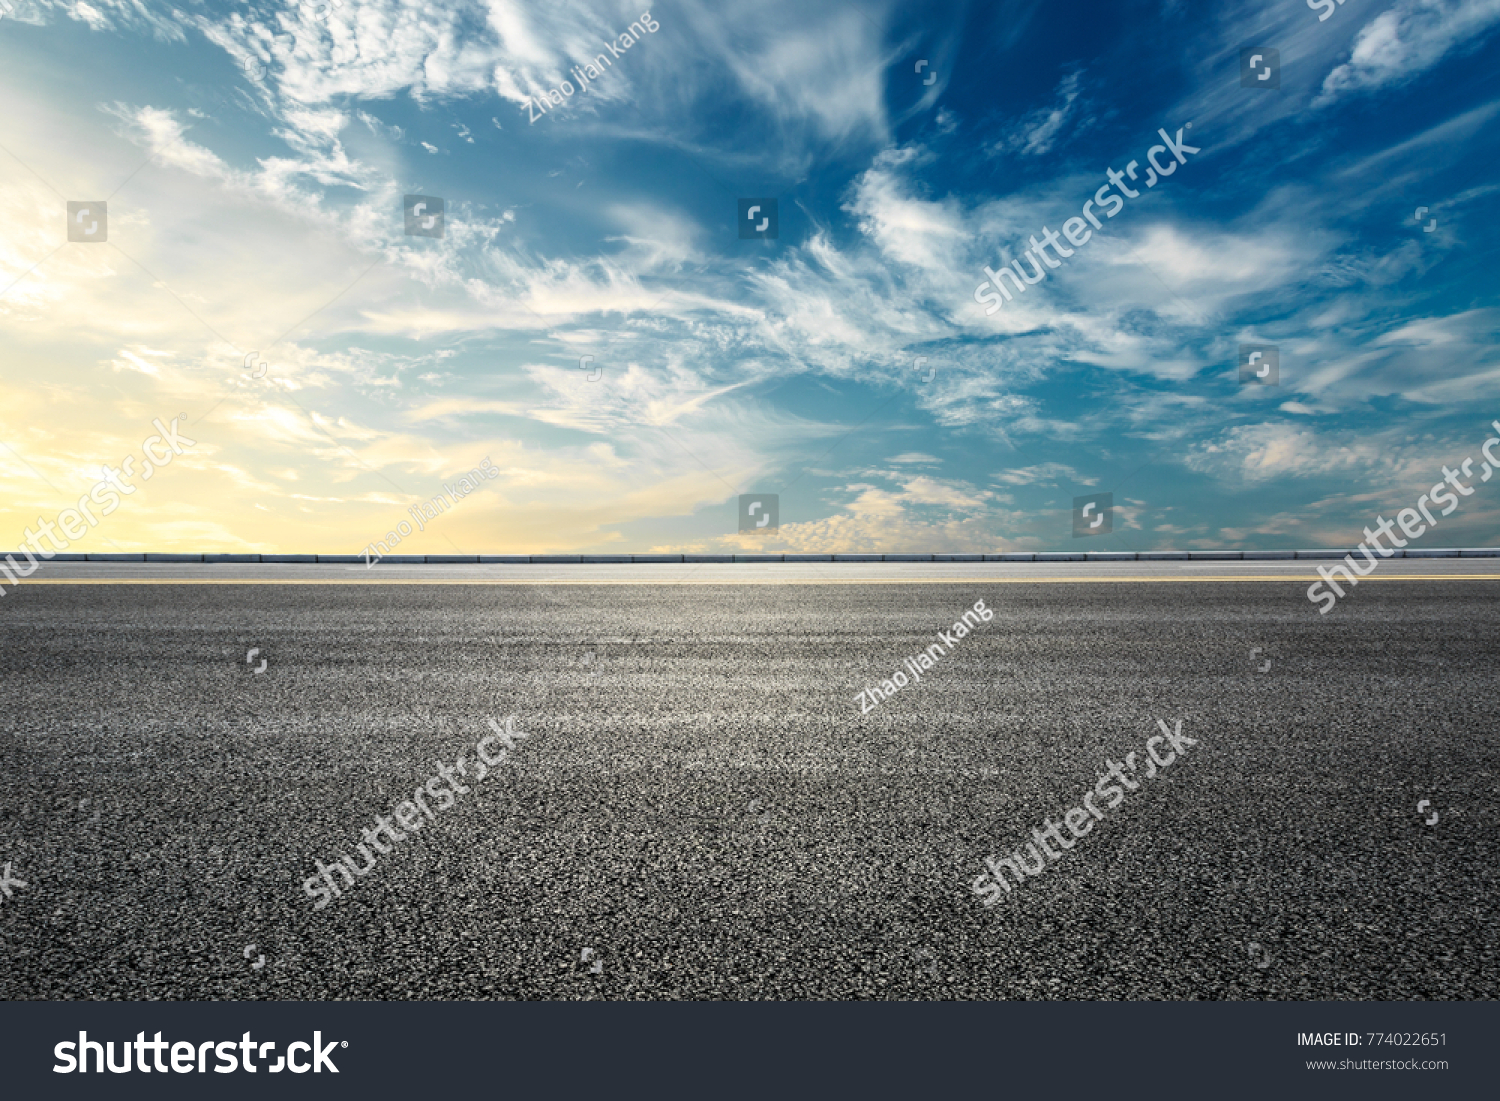 Empty highway asphalt road and beautiful sky sunset landscape #774022651